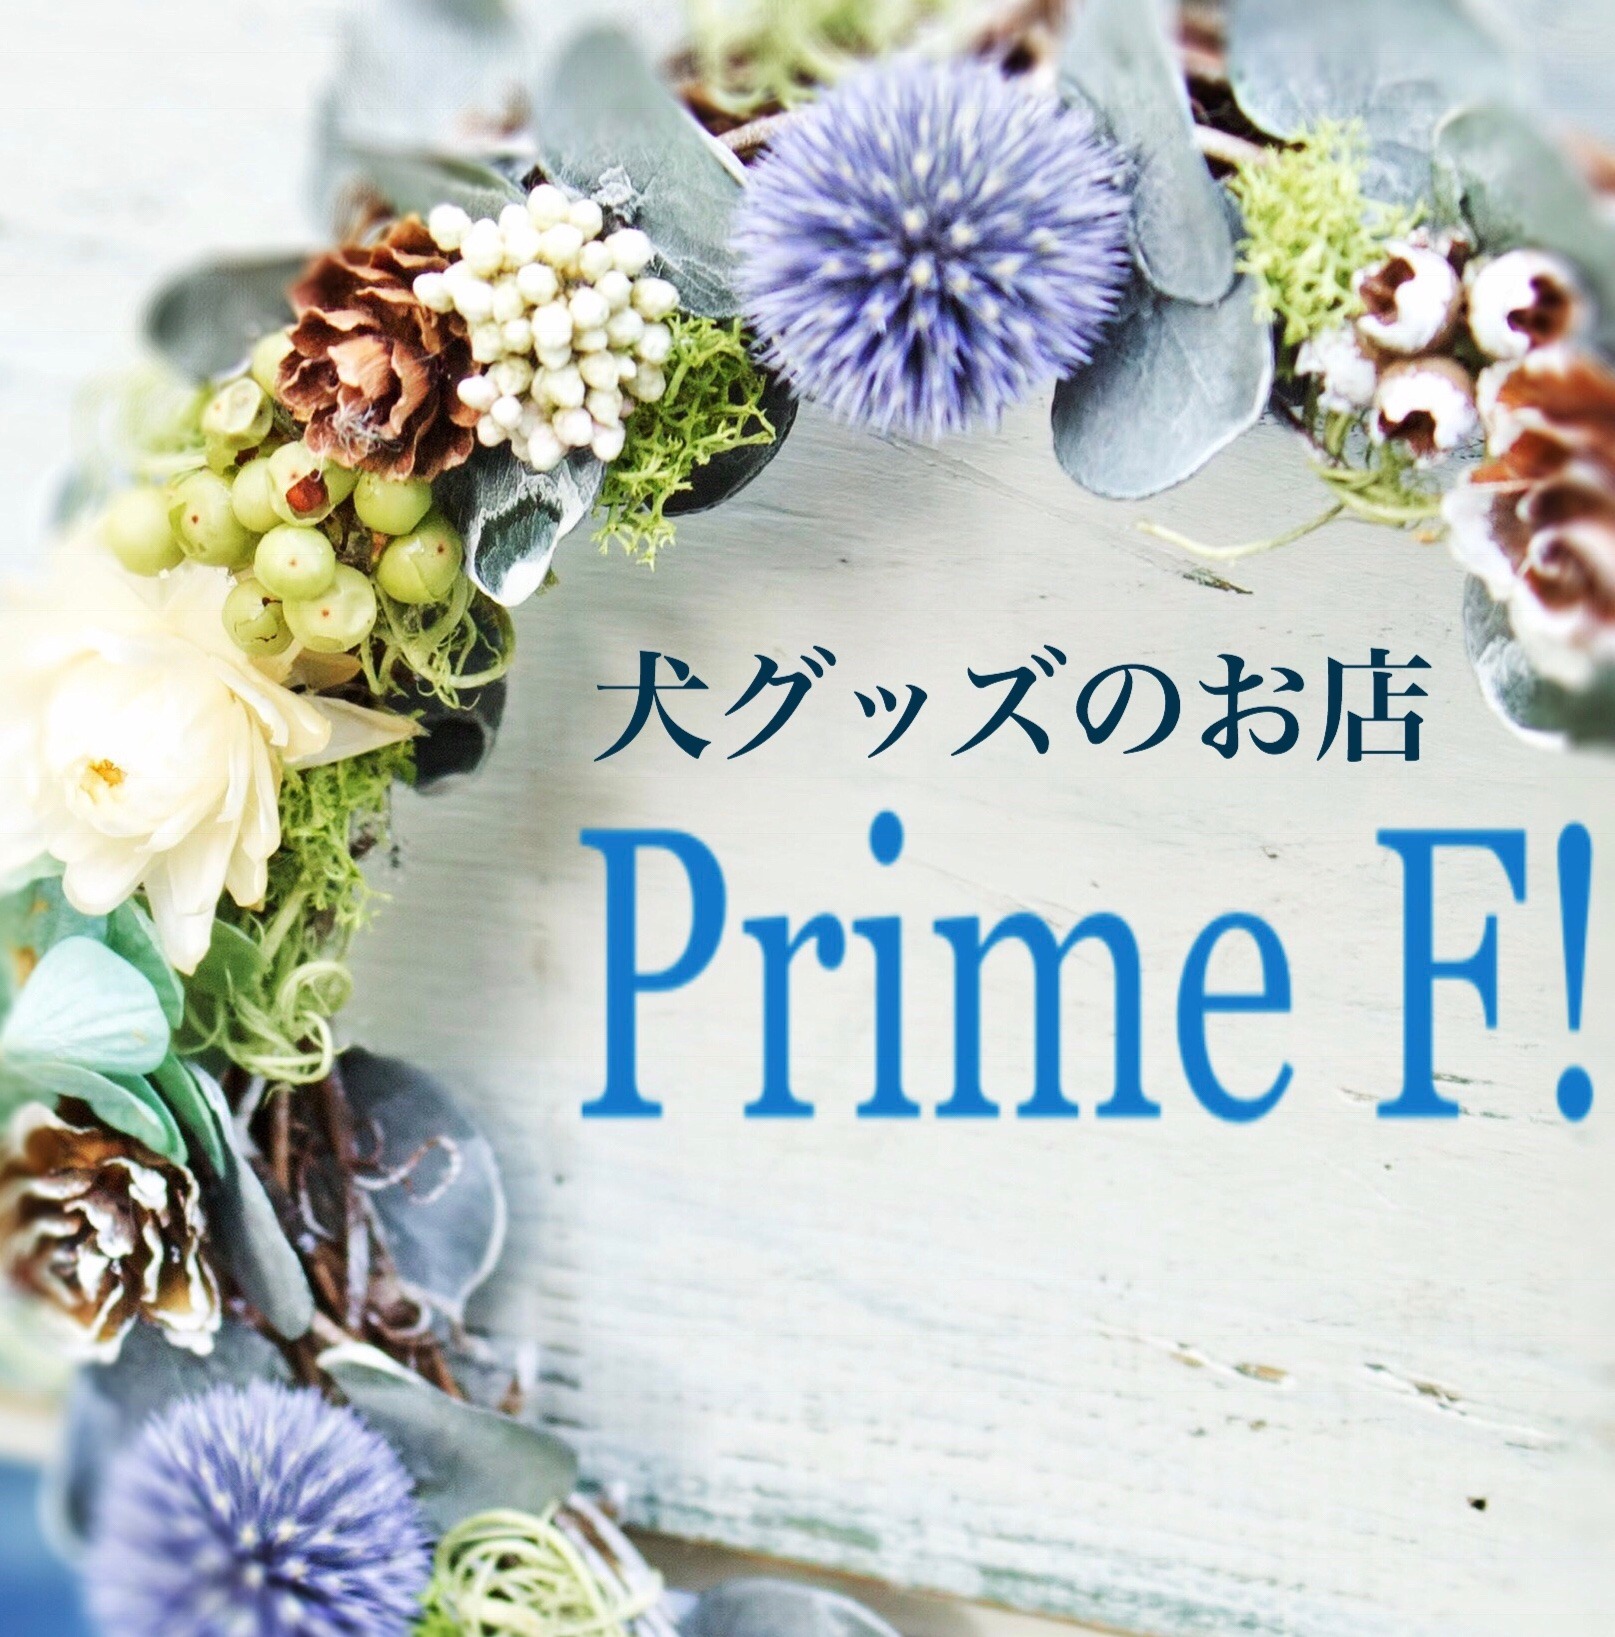 Prime F!